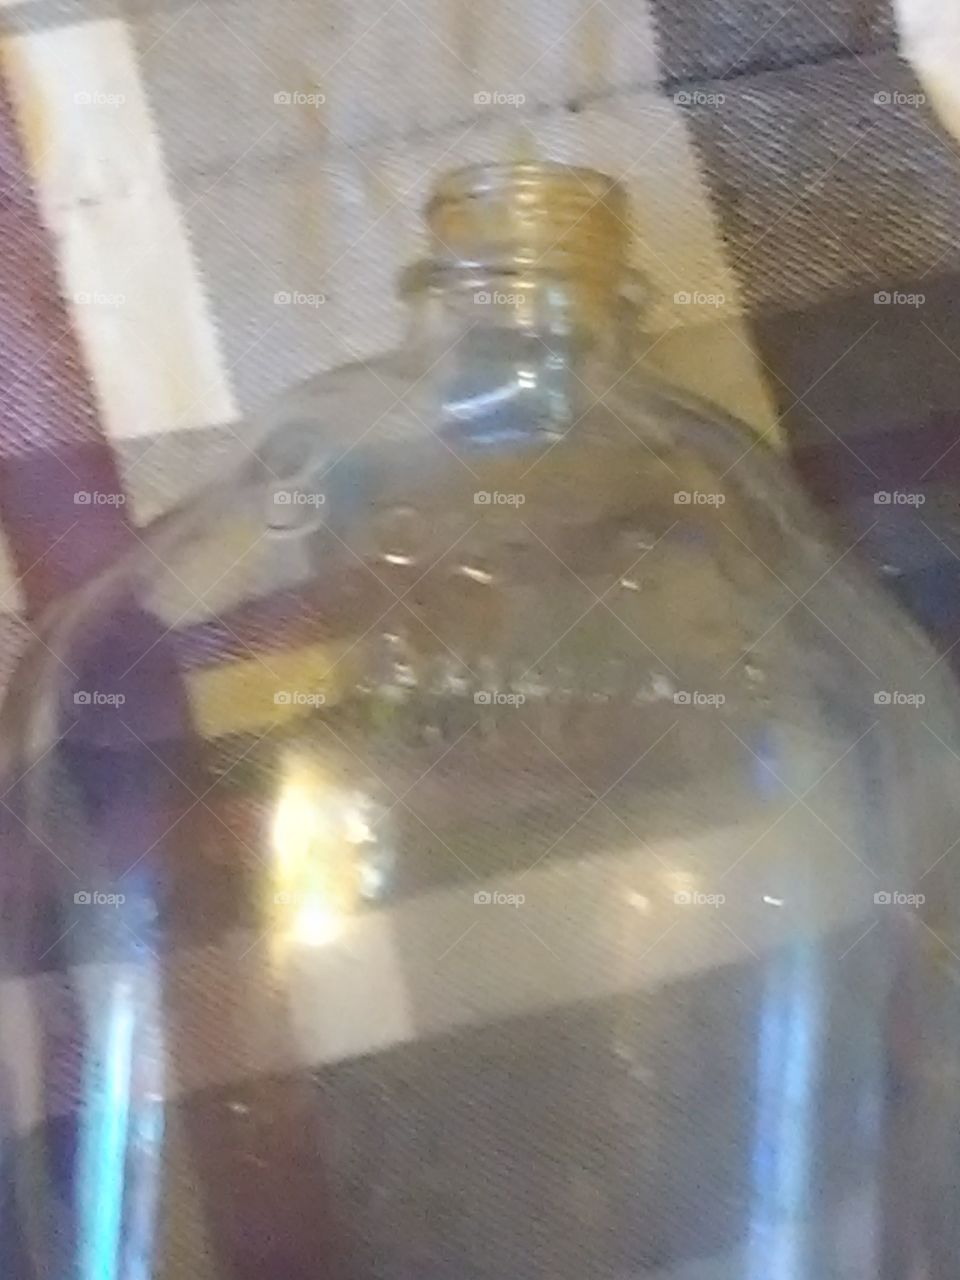 an antique glass Little Bo Peep ammonia bottle on a textured background